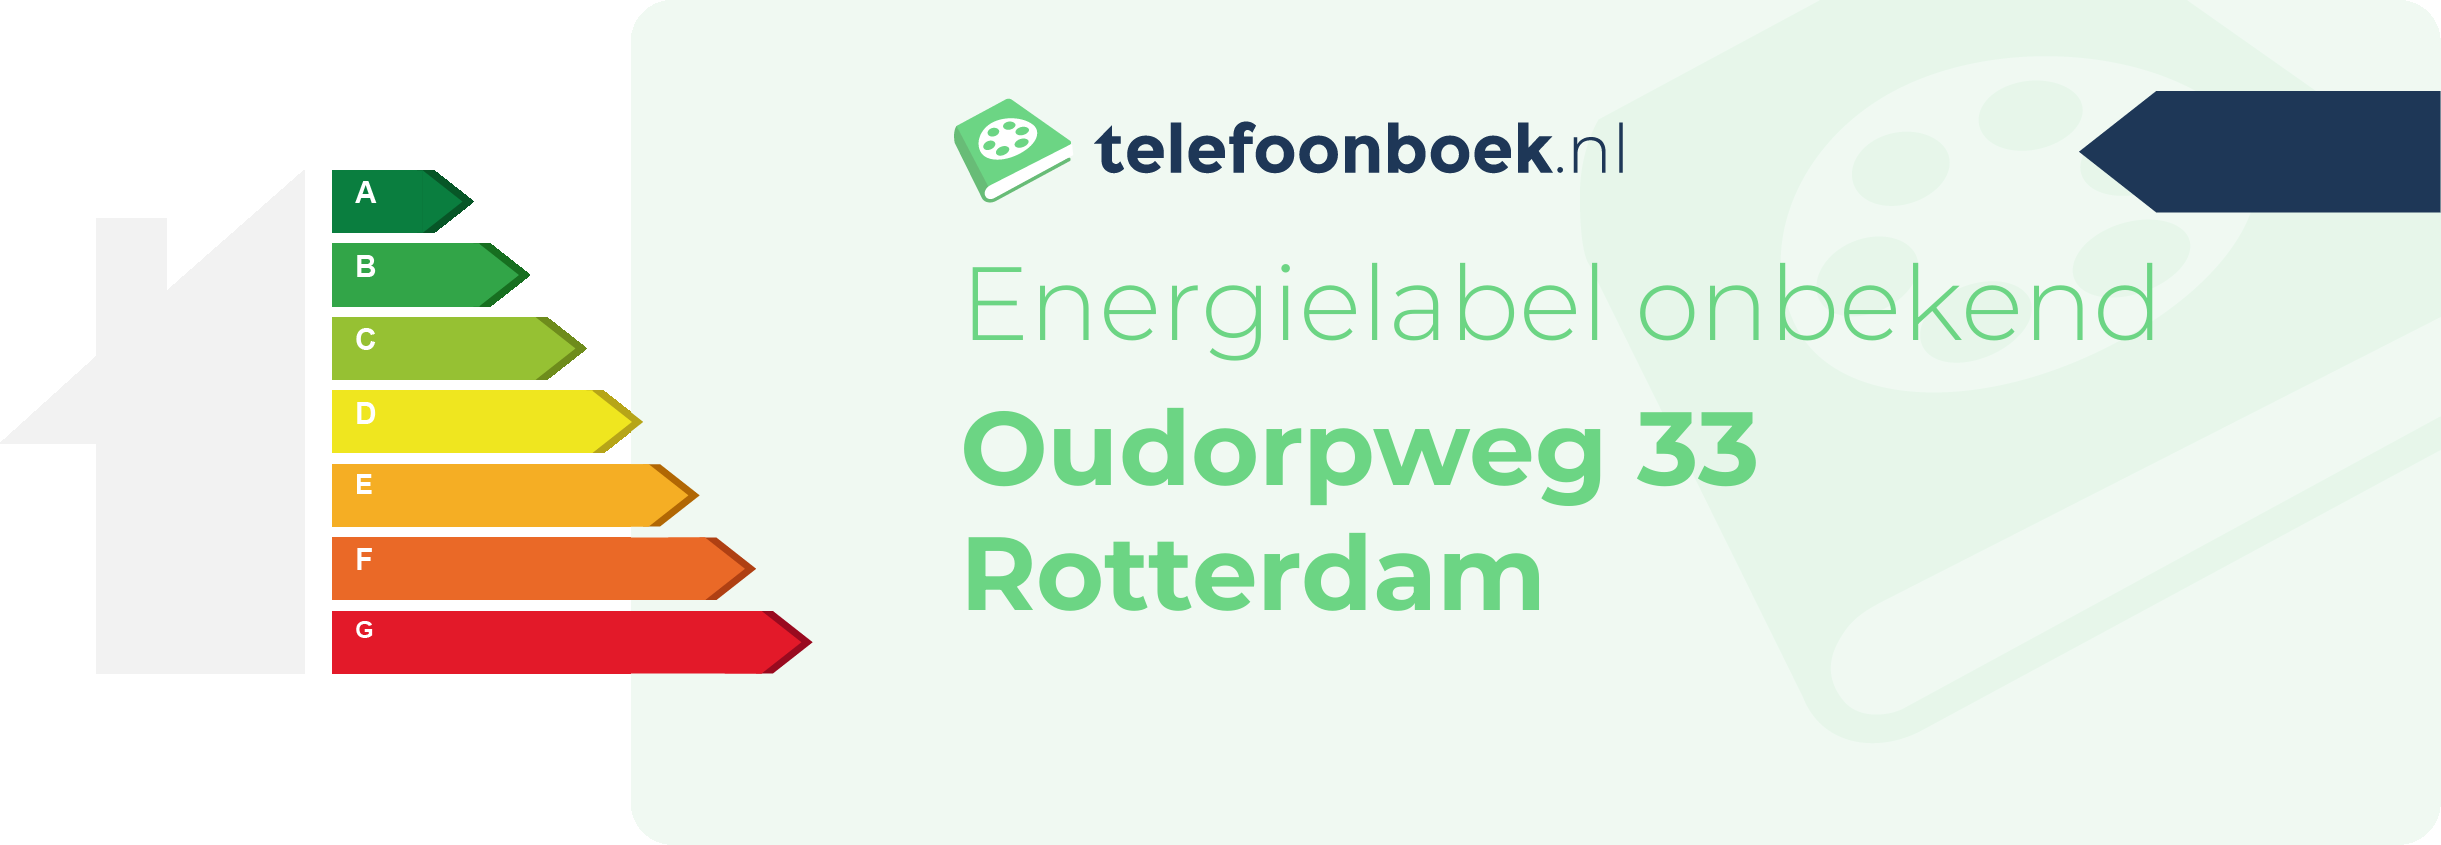 Energielabel Oudorpweg 33 Rotterdam